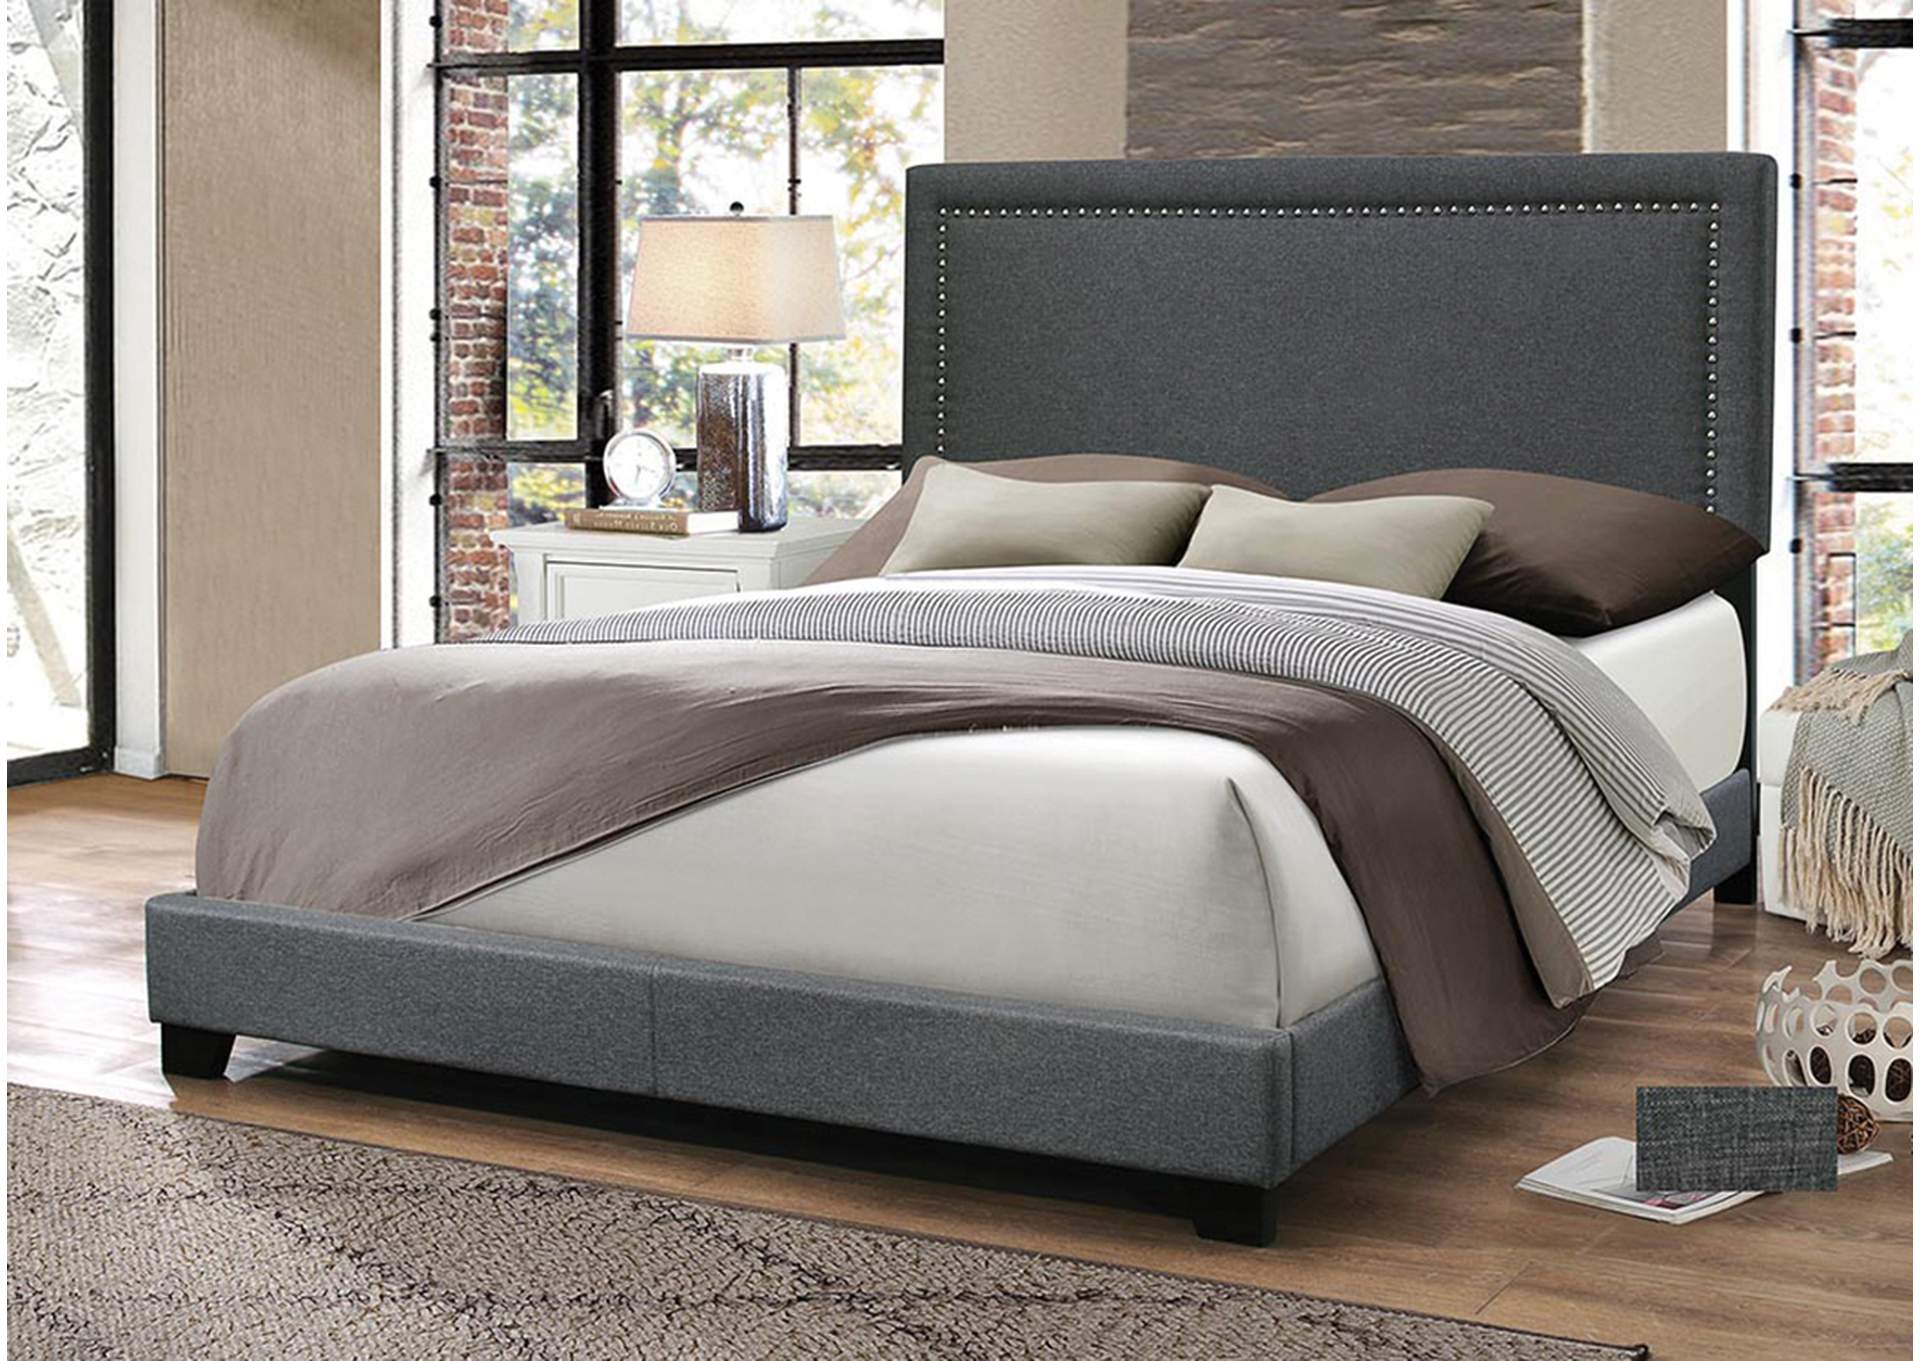 B553 Full Bed,Nationwide